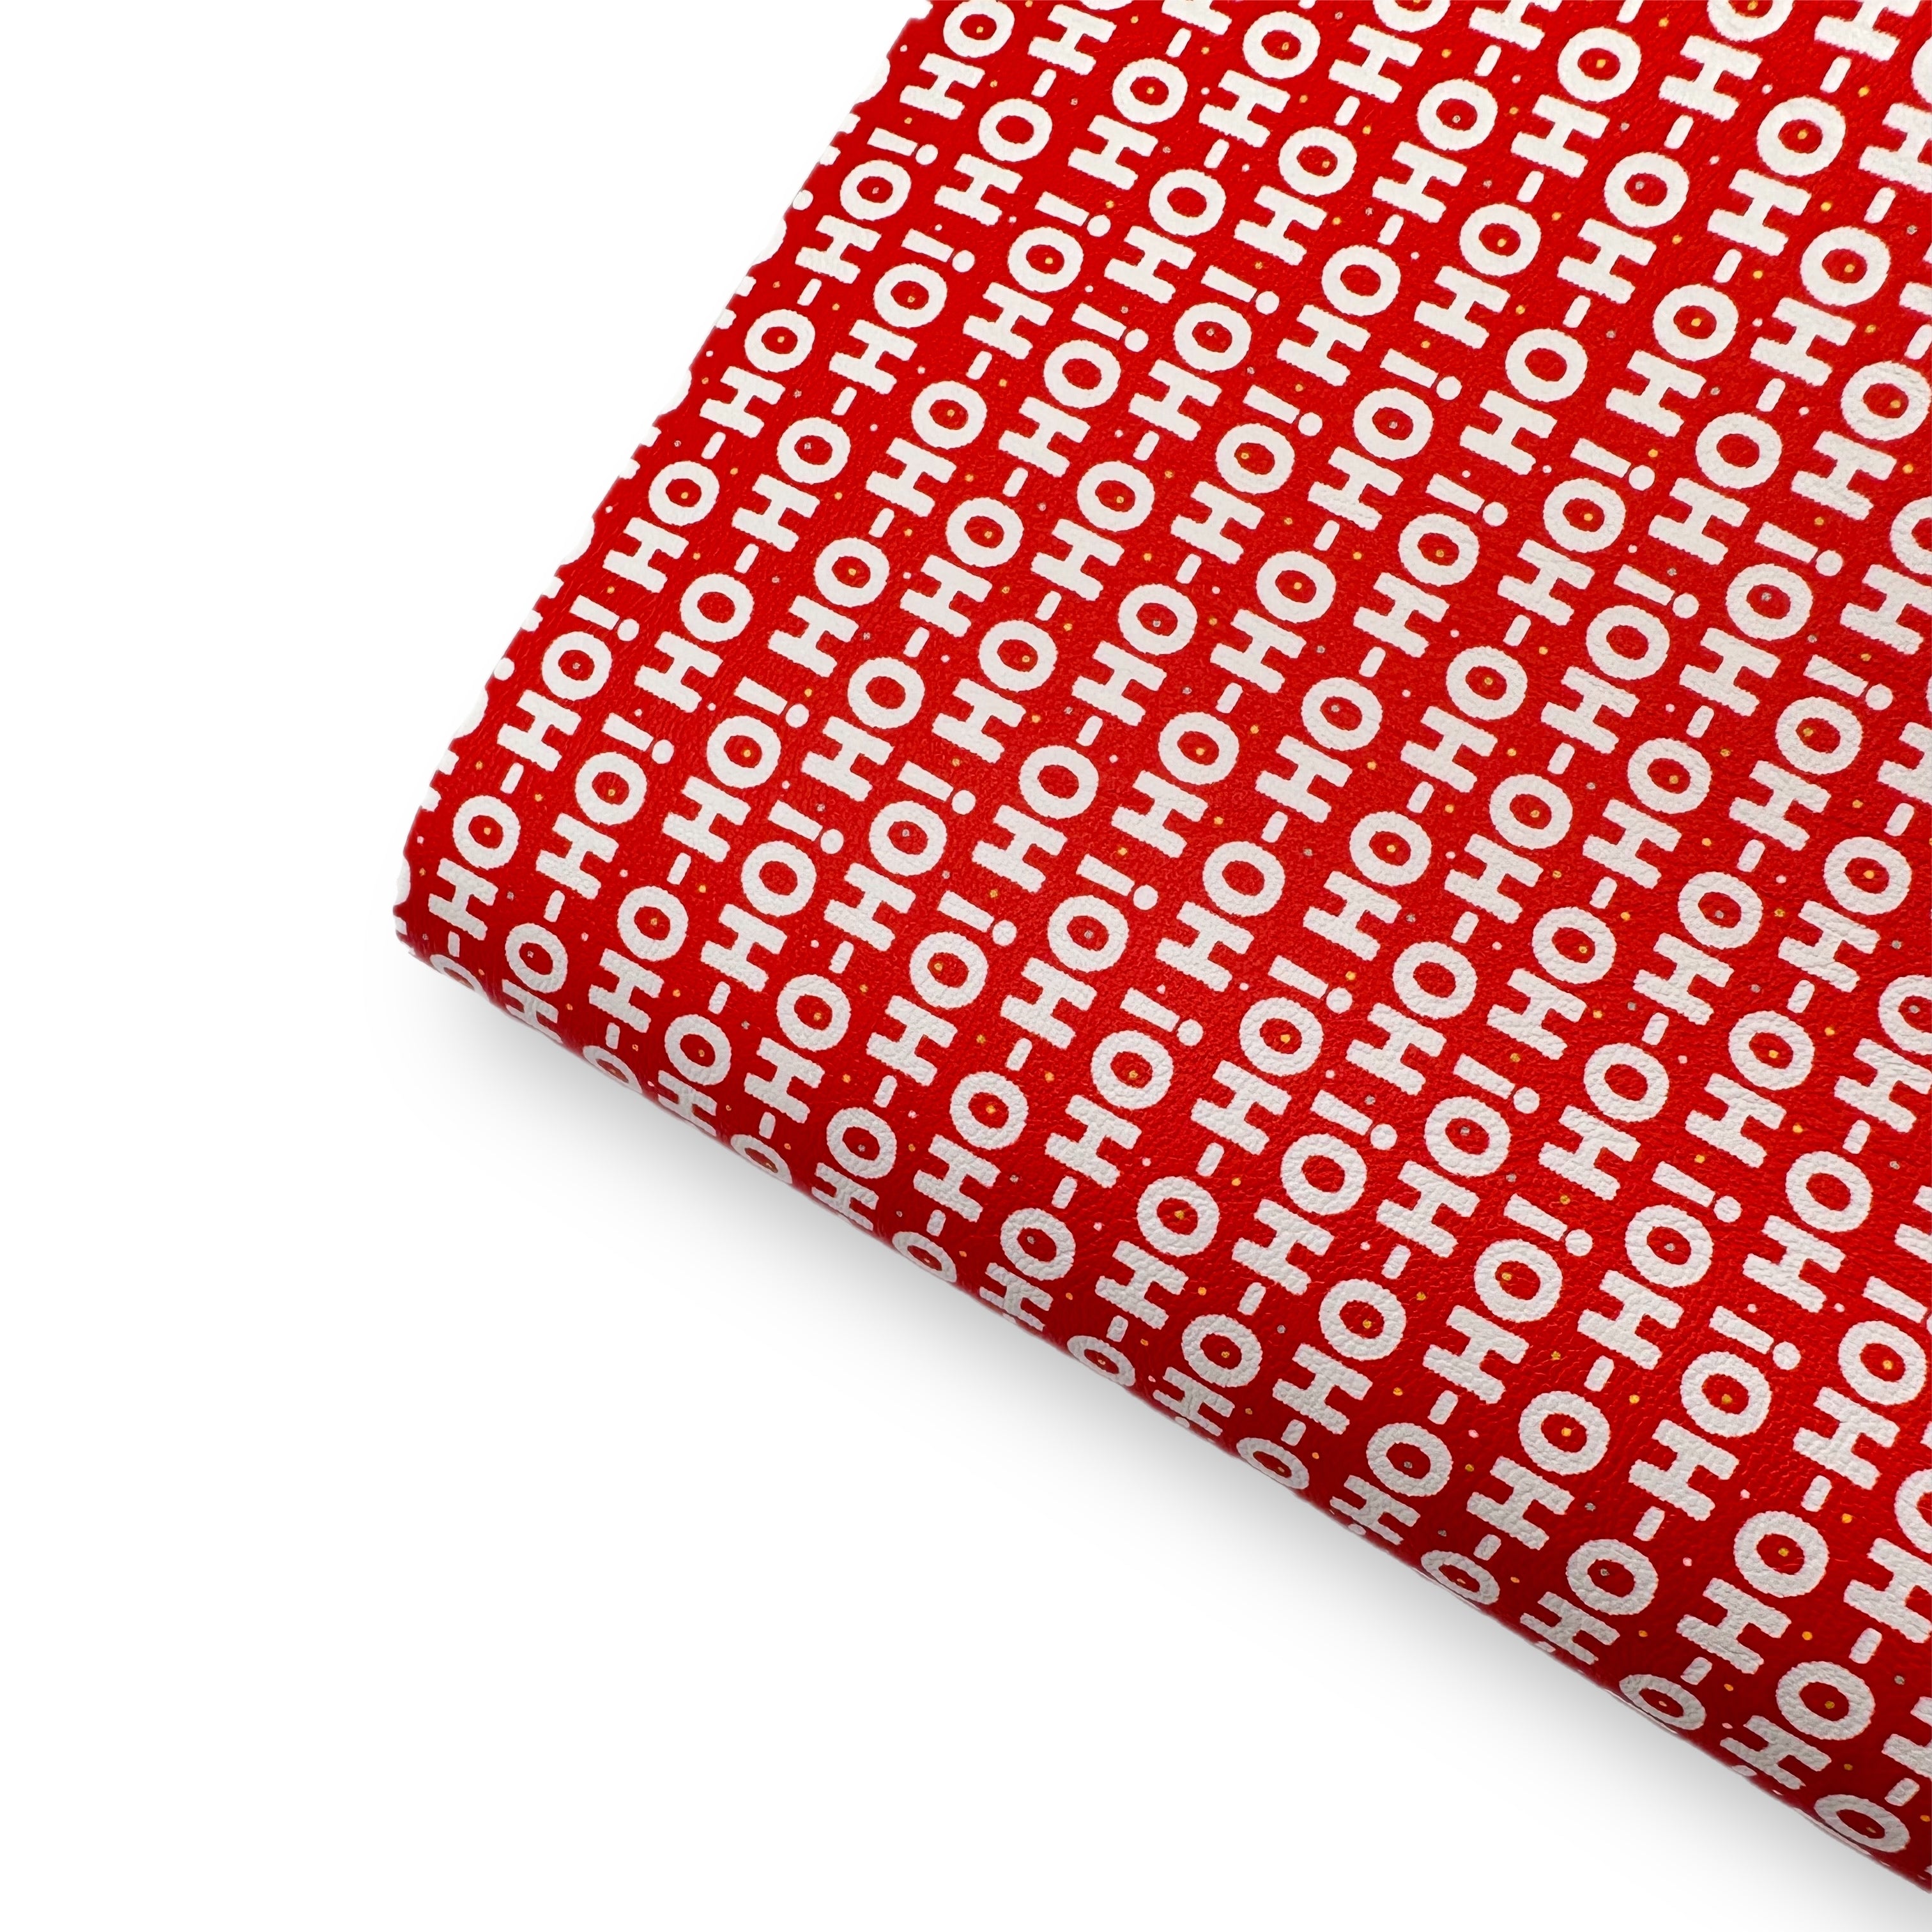 HO-HO-HO Red Premium Faux Leather Fabric Sheets